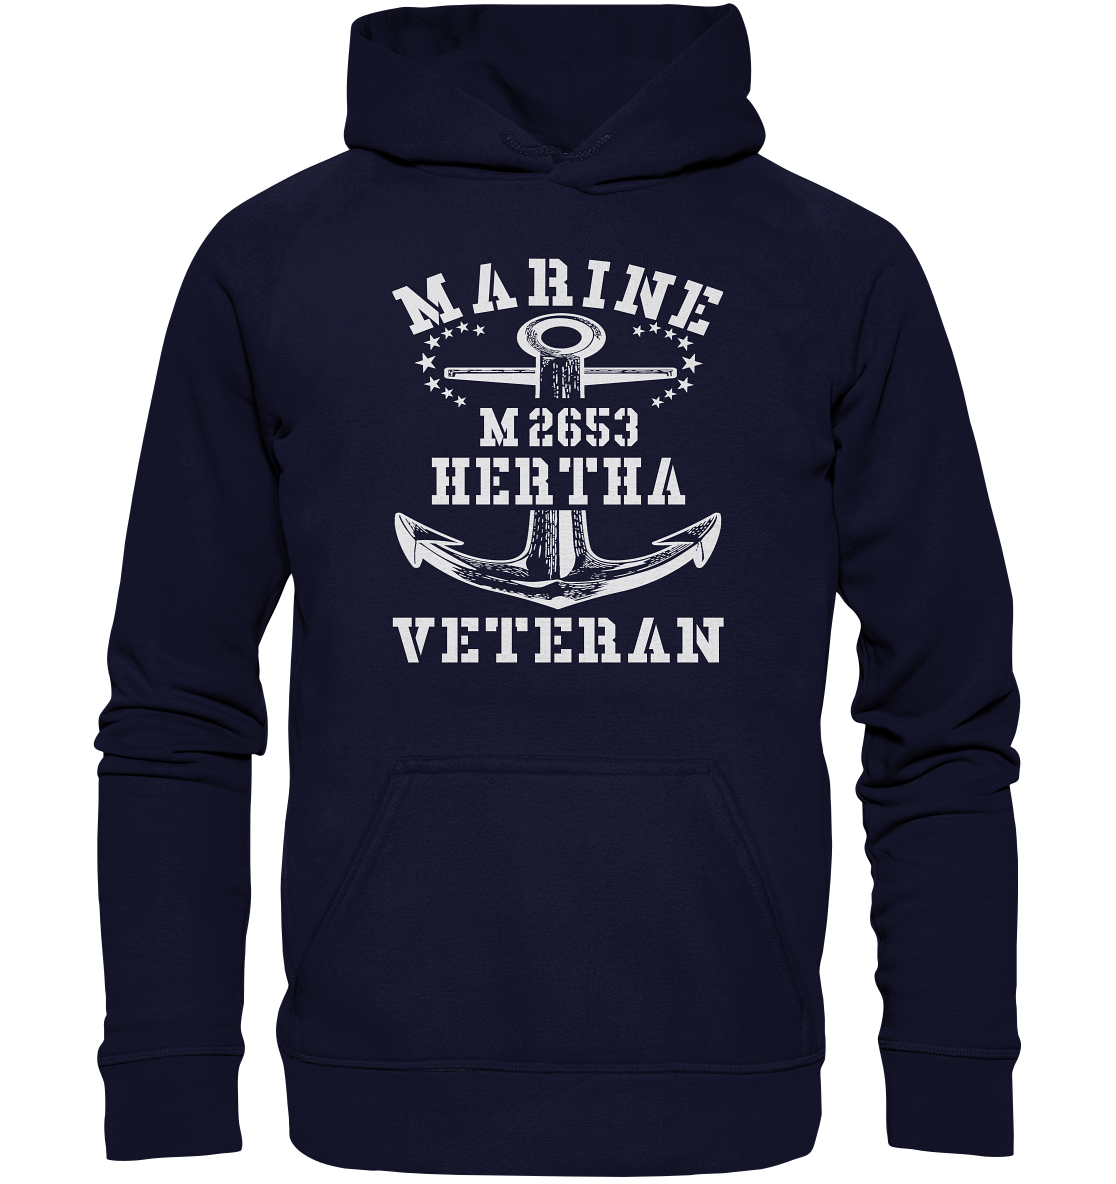 BiMi M2653 H.E.R.T.H.A. Marine Veteran - Basic Unisex Hoodie